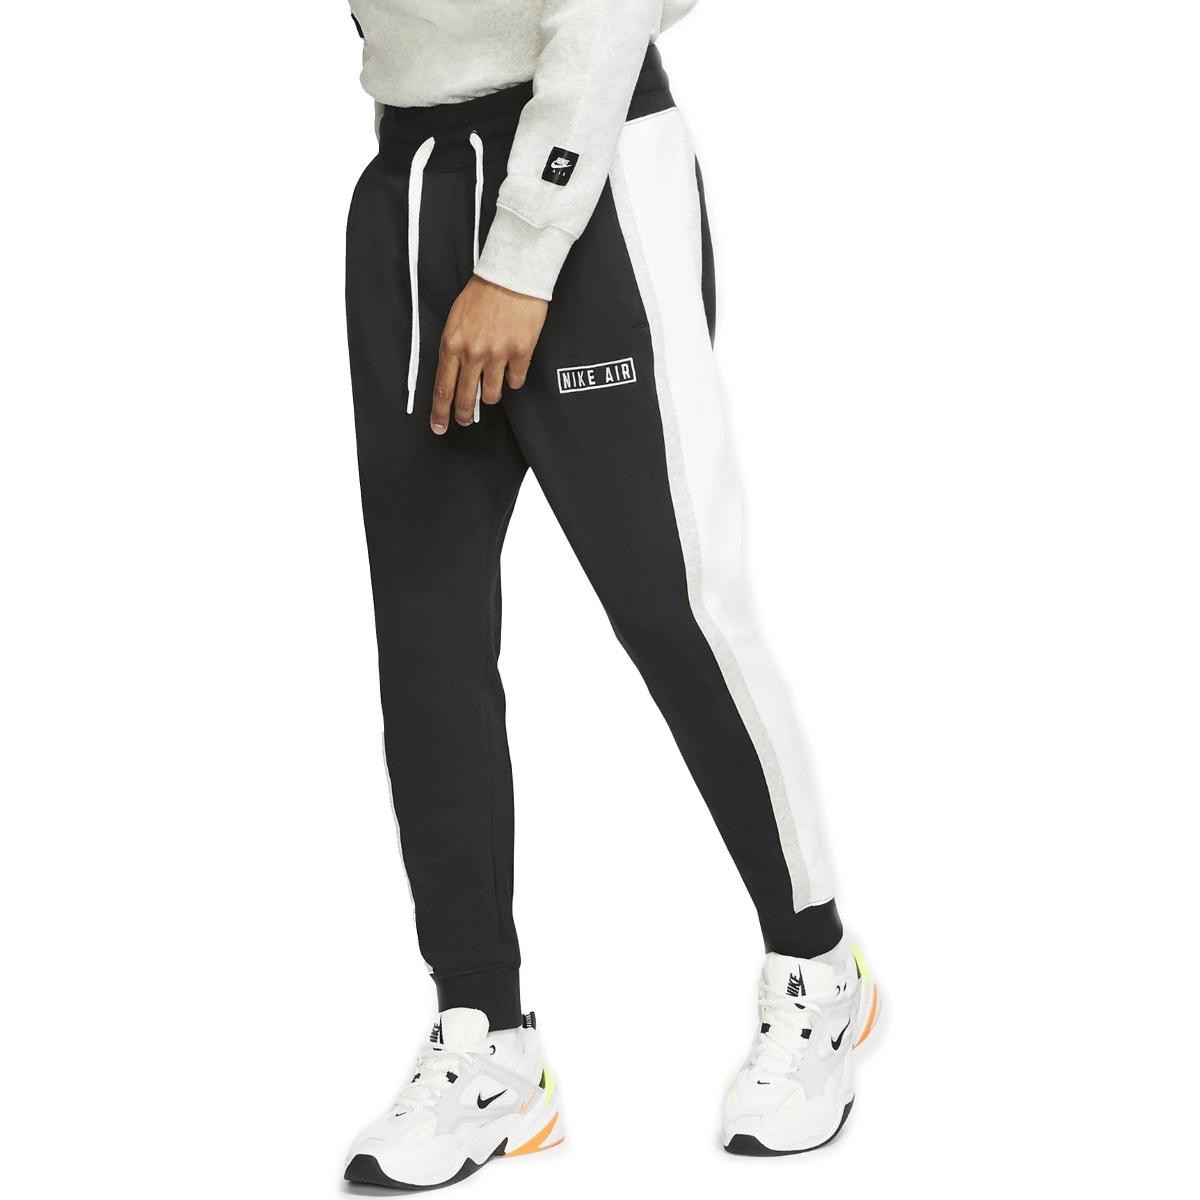 Pantaloni pantatuta sportivi Nike Air in fleece da uomo rif. BV5147